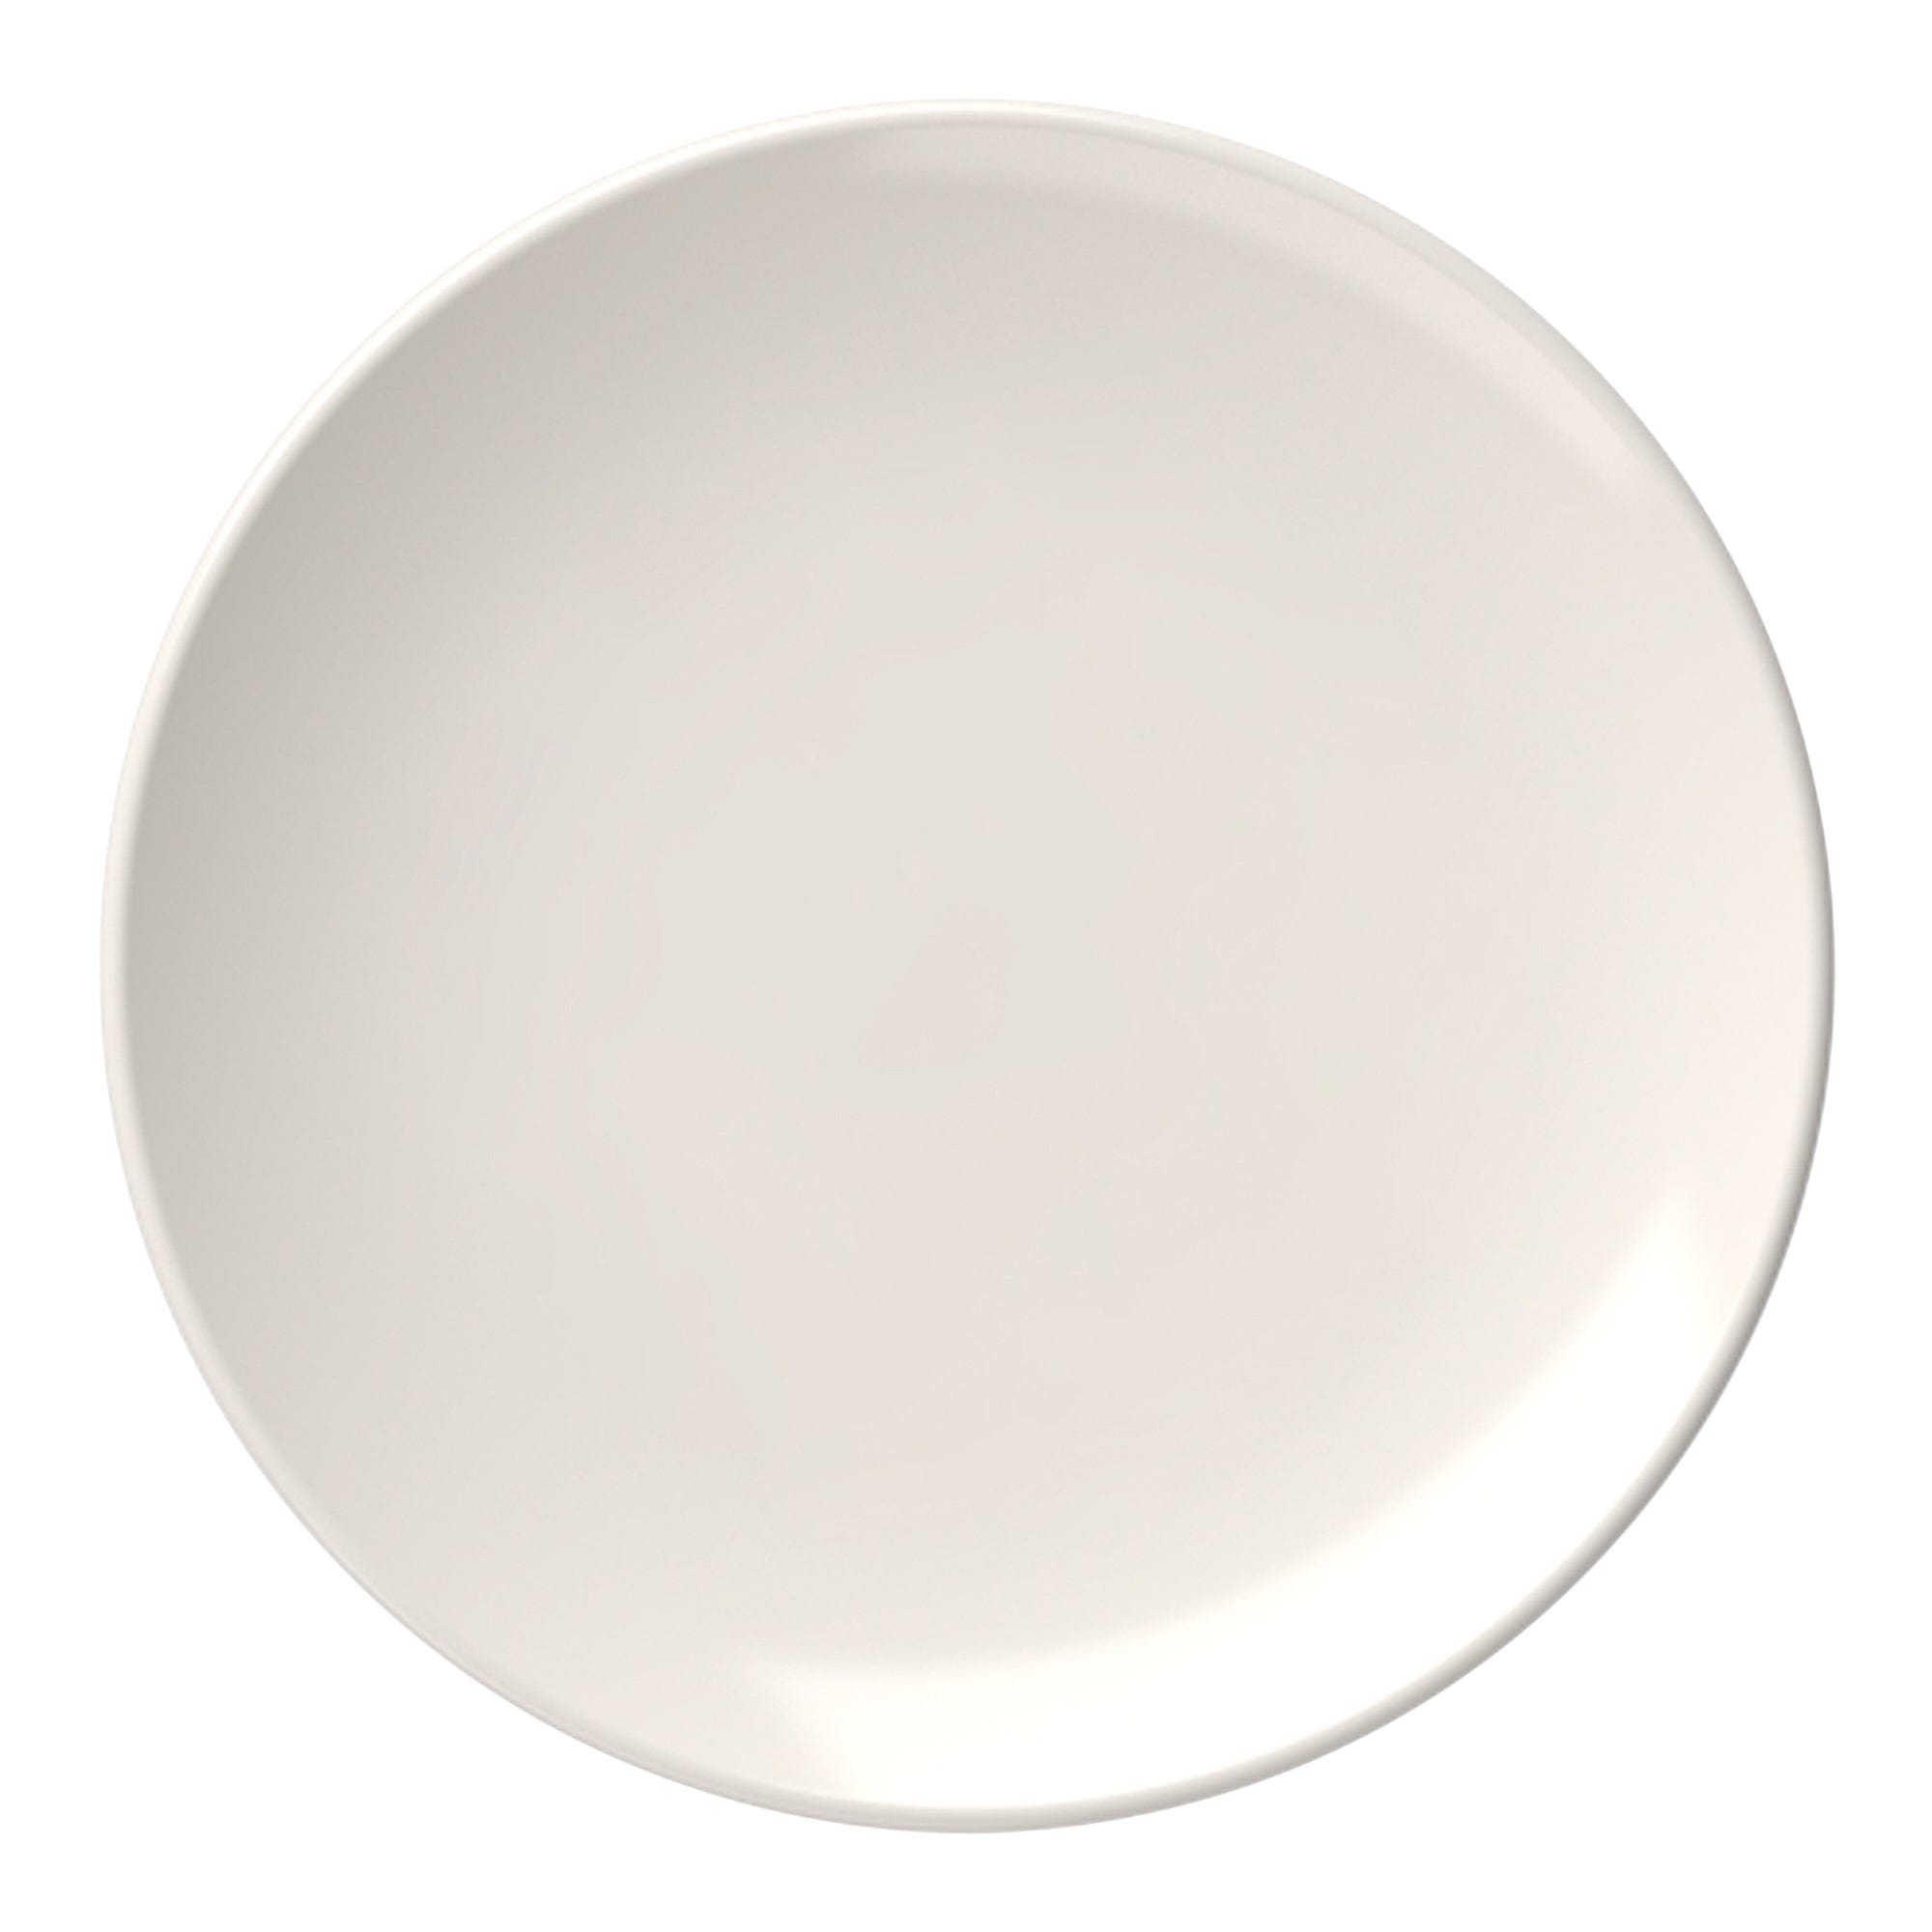 Lona Porcelain Plate 8.2"